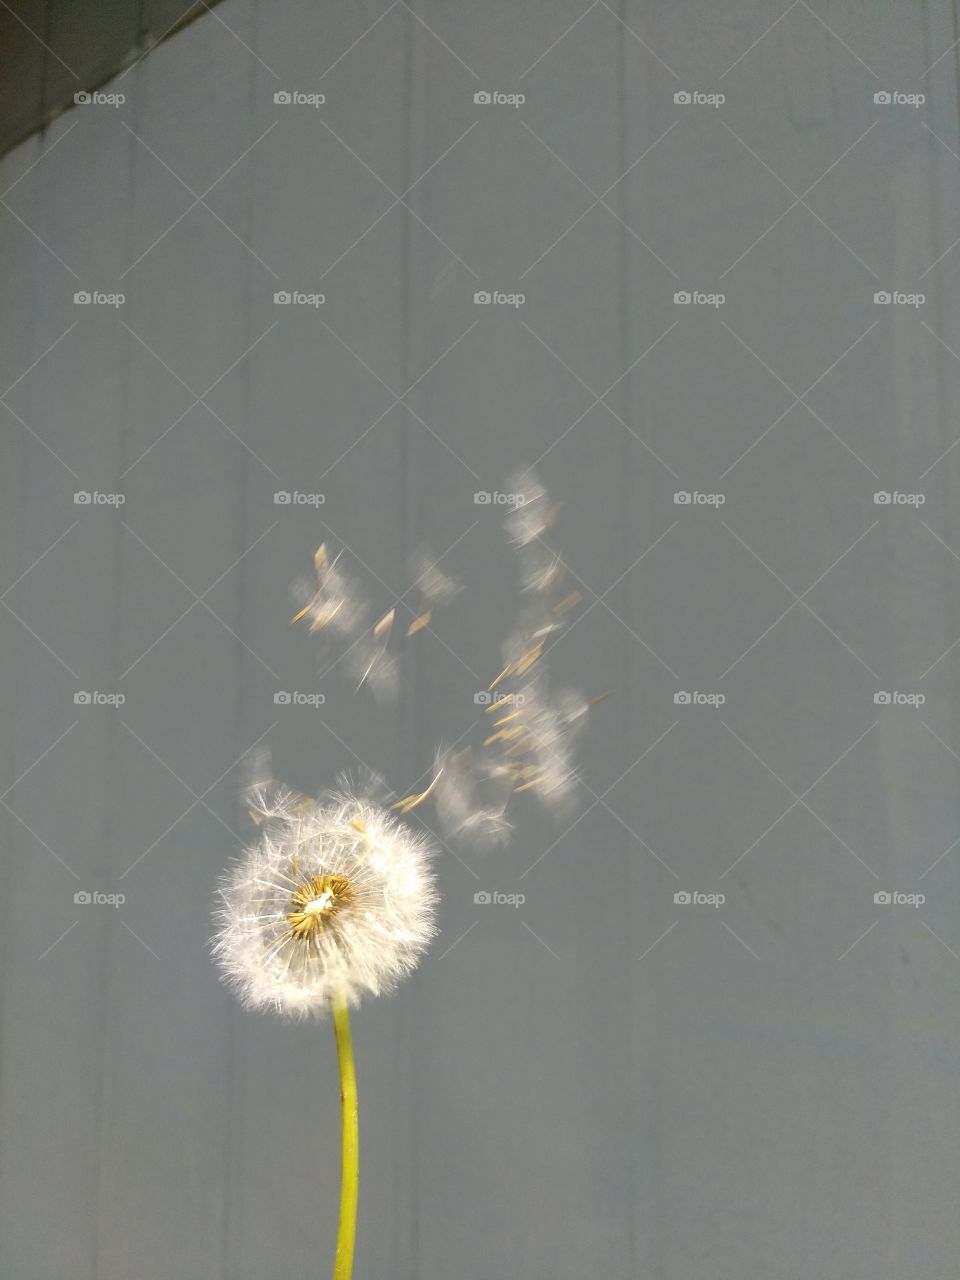 dandelion from smartphone camera